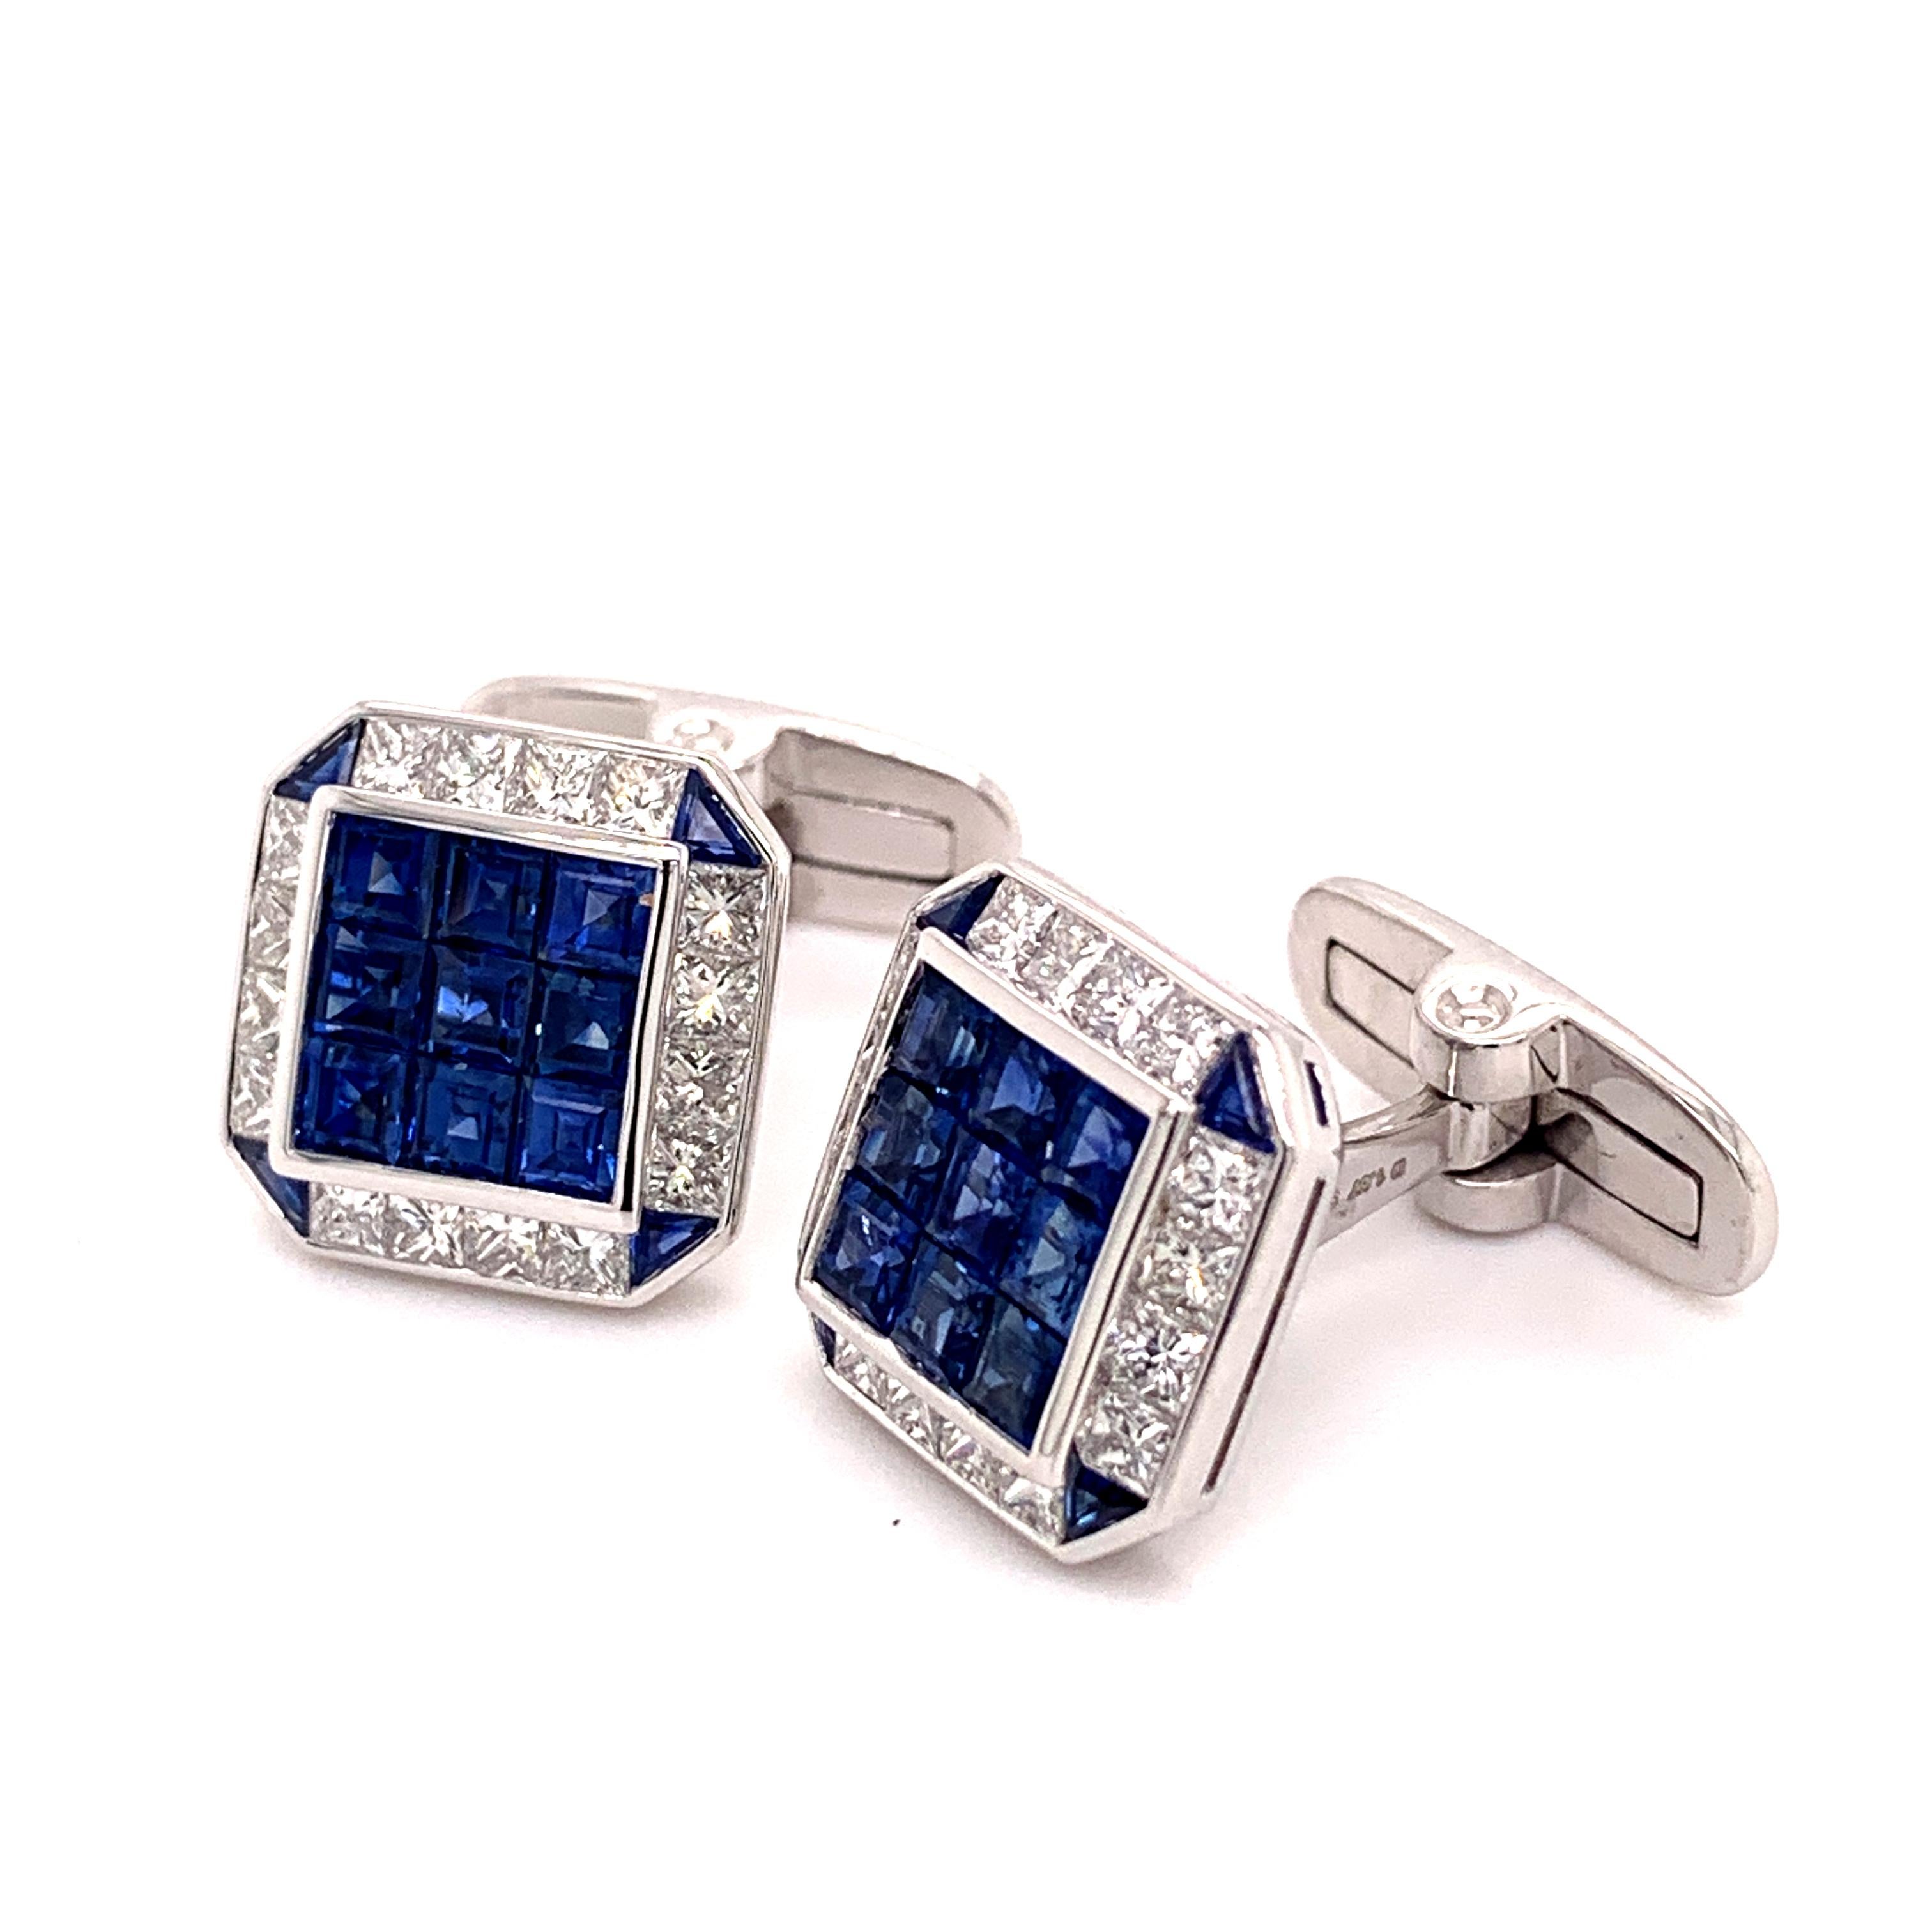 Men's Platinum 1.93 Carat Diamonds and Sapphire Cufflinks